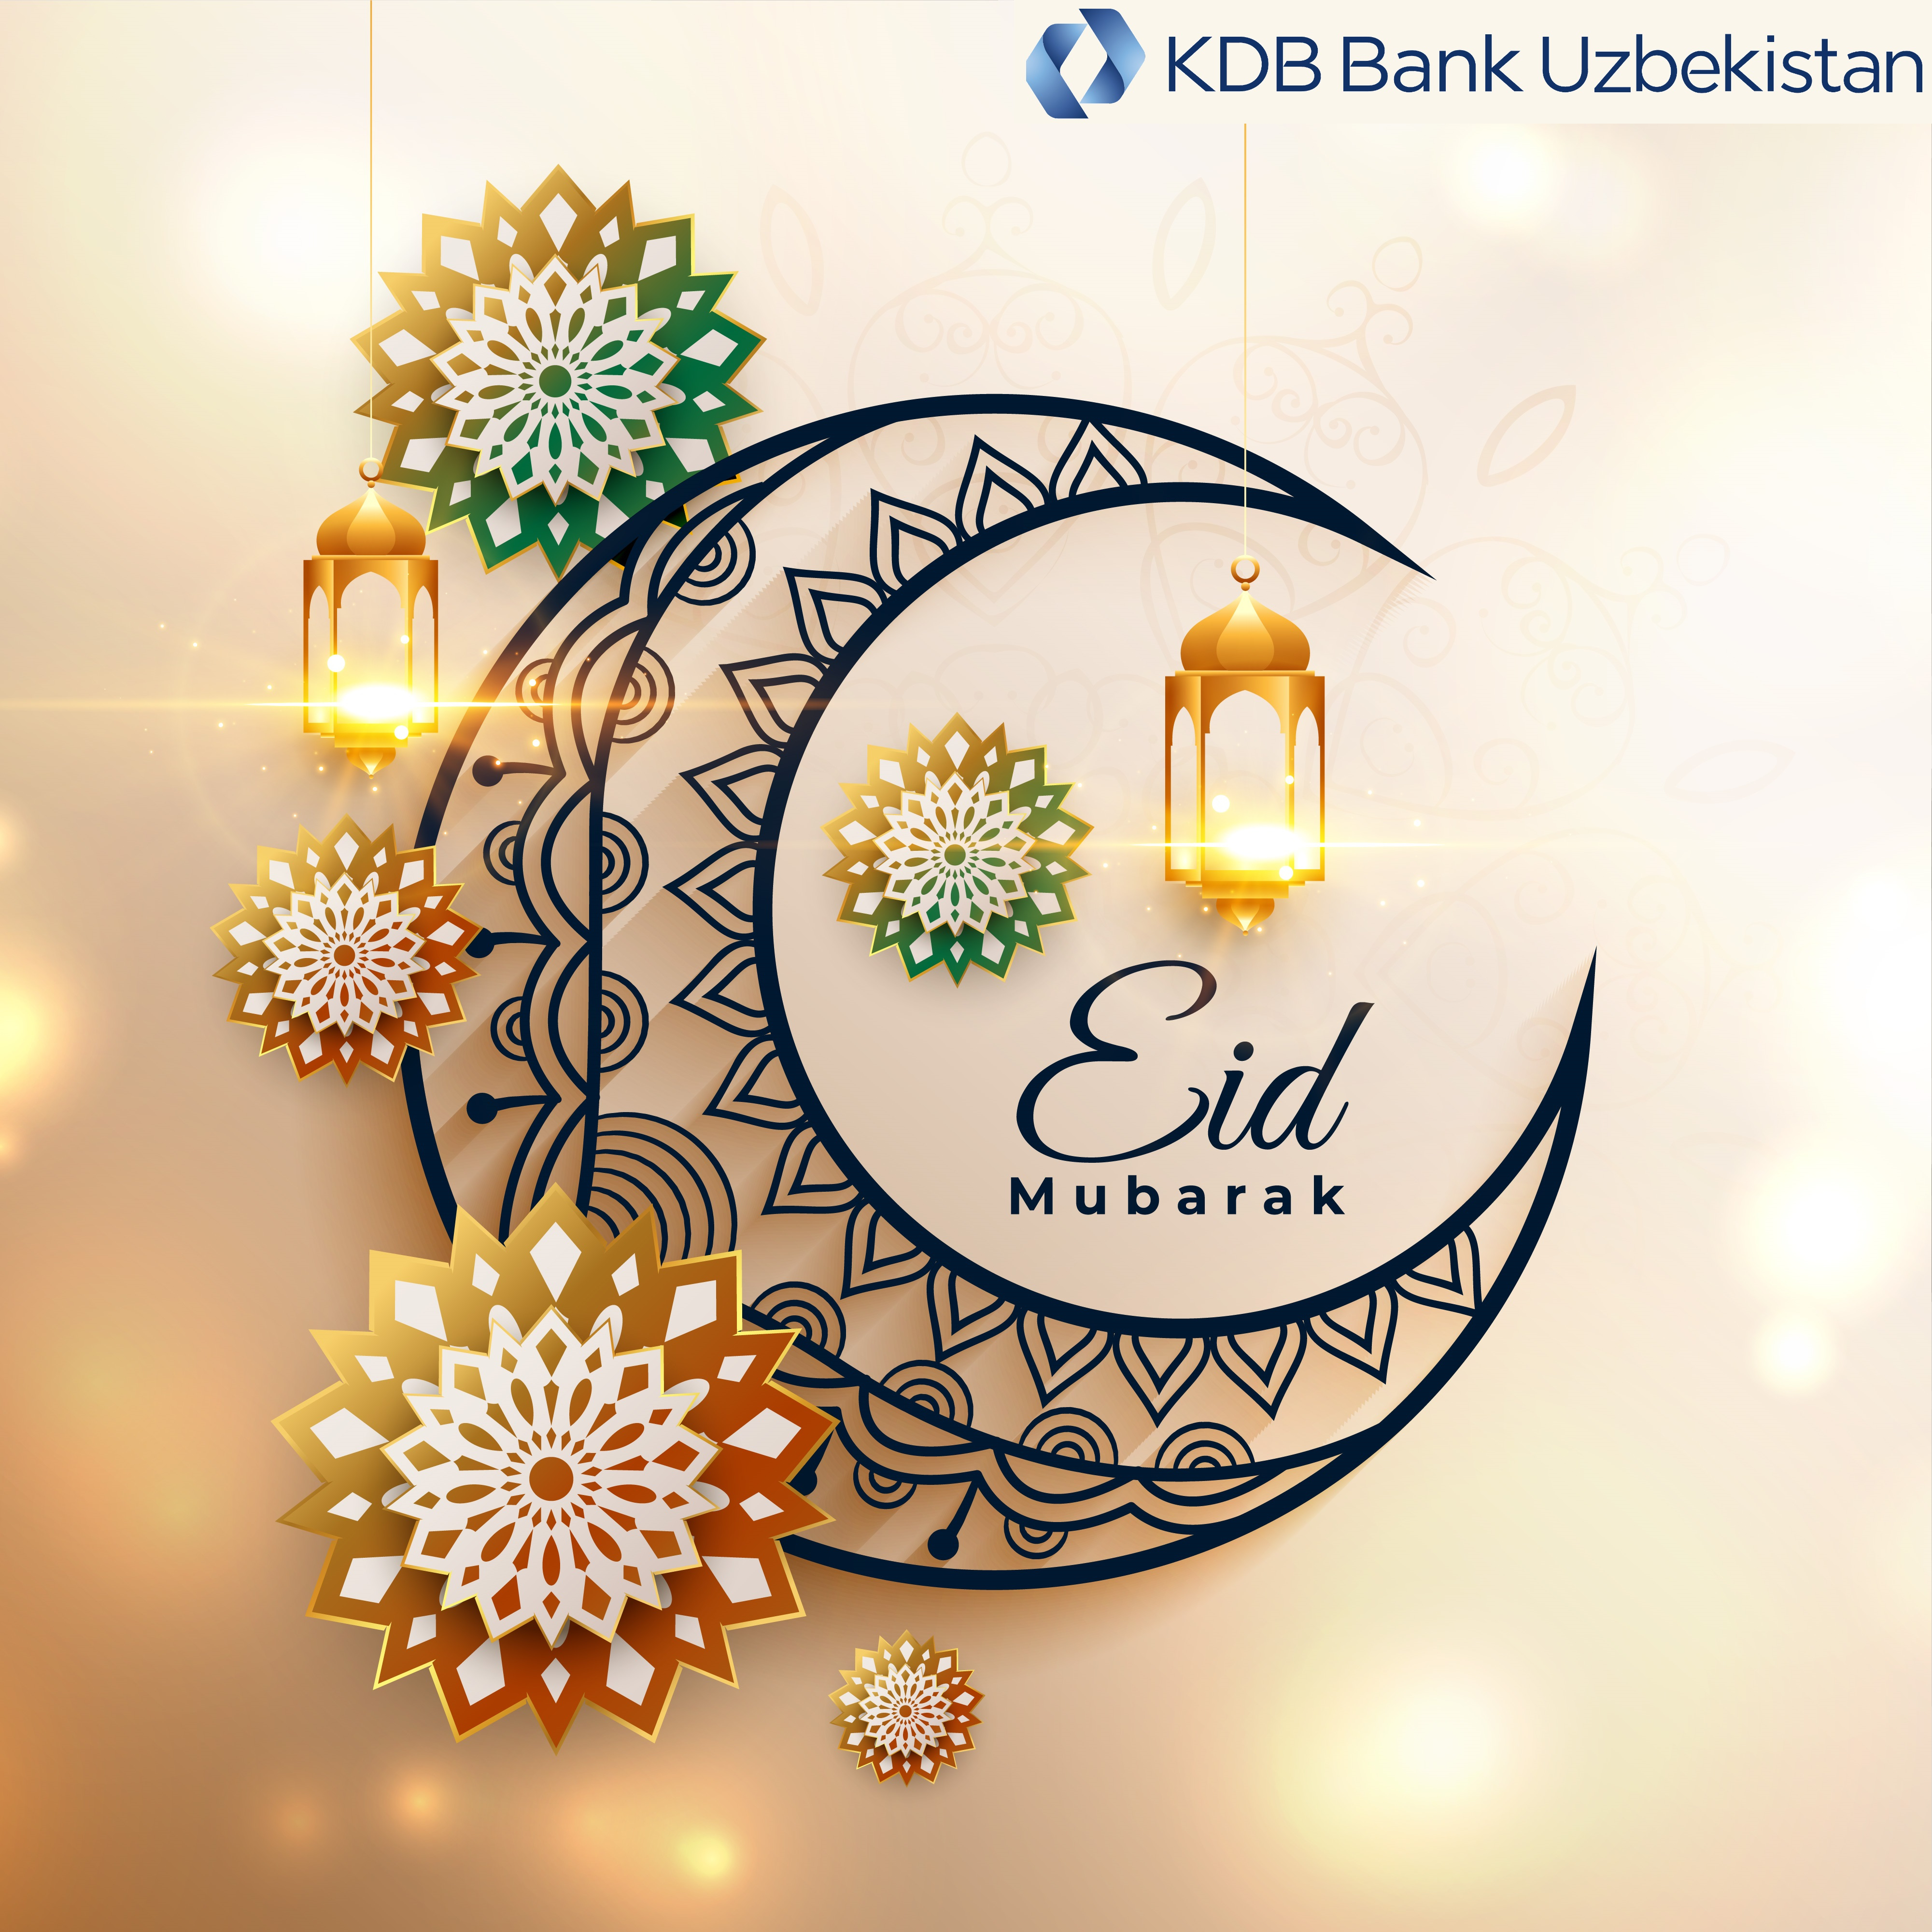 JSC “KDB Bank Uzbekistan” extends warm wishes on upcoming Qurbon Hayit!